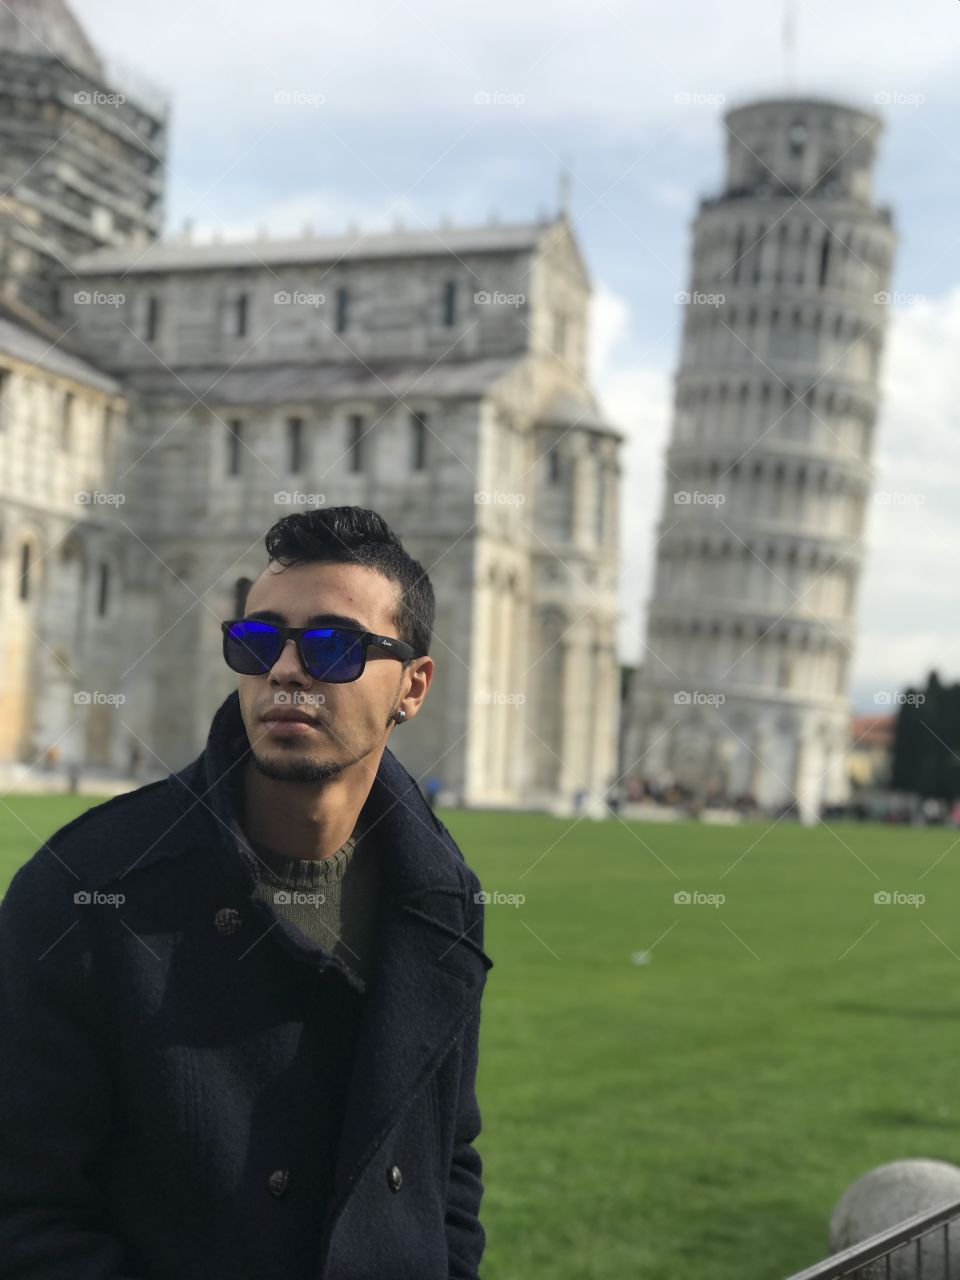 Pisa tower
